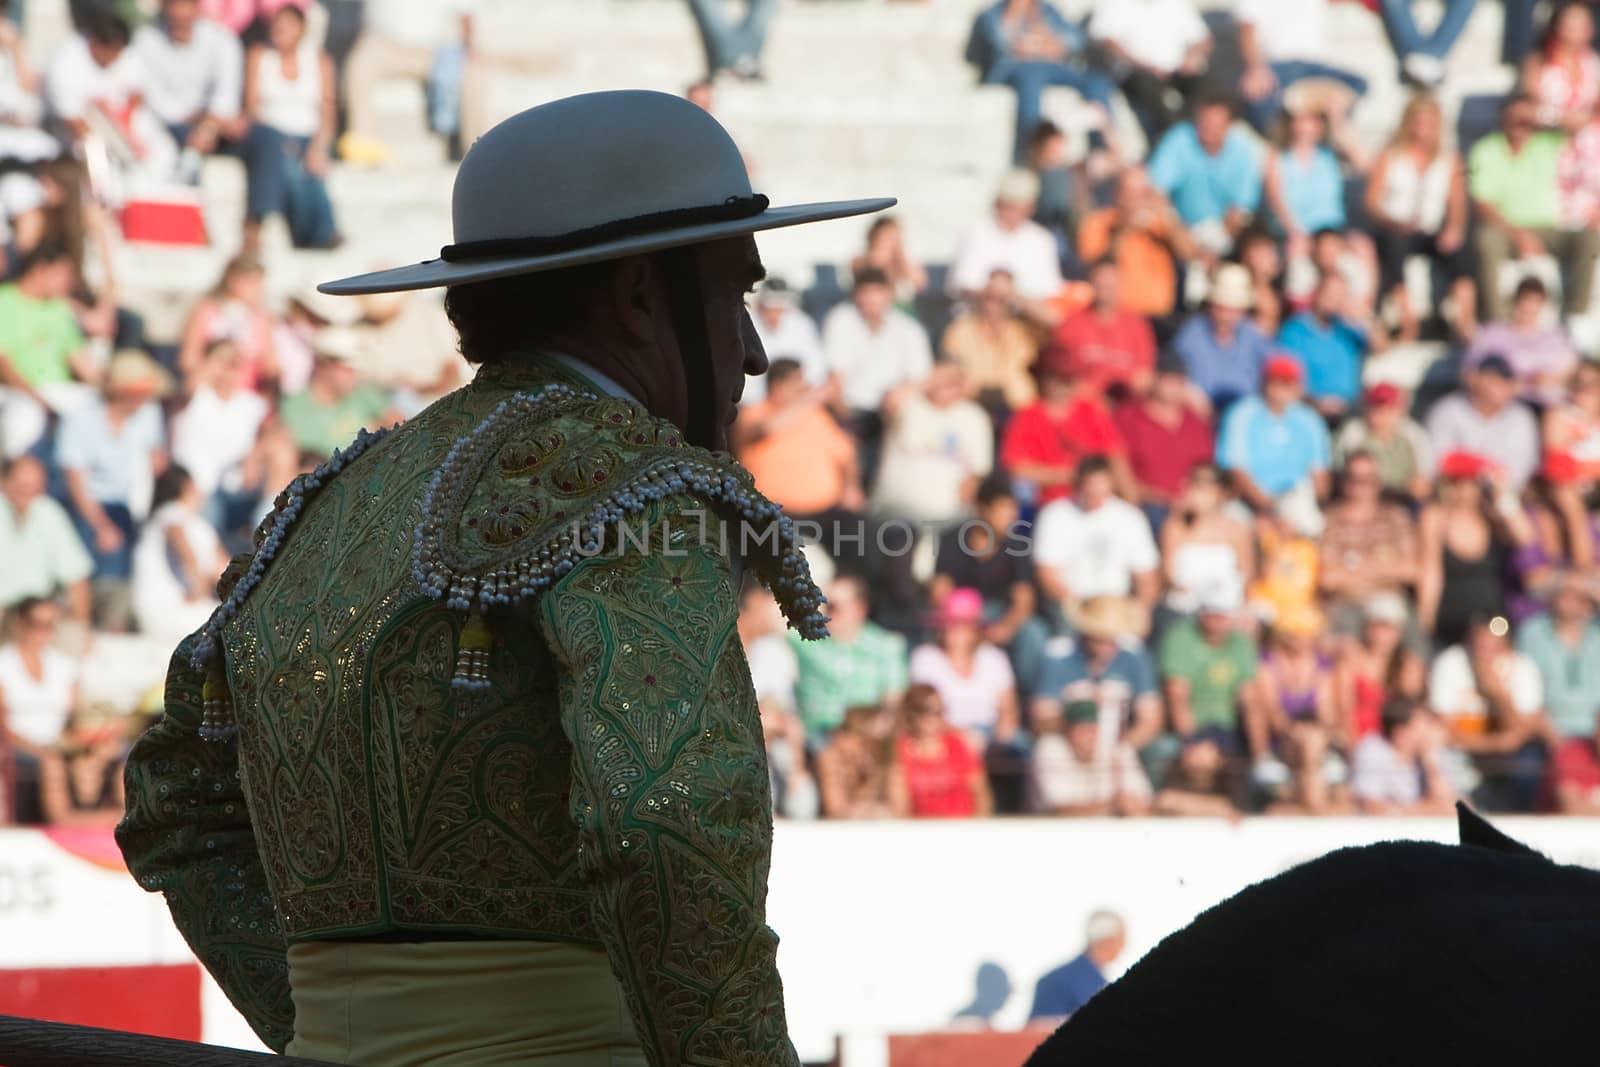 Picador bullfighter, lancer whose job it is to weaken bull's neck muscles, Spain